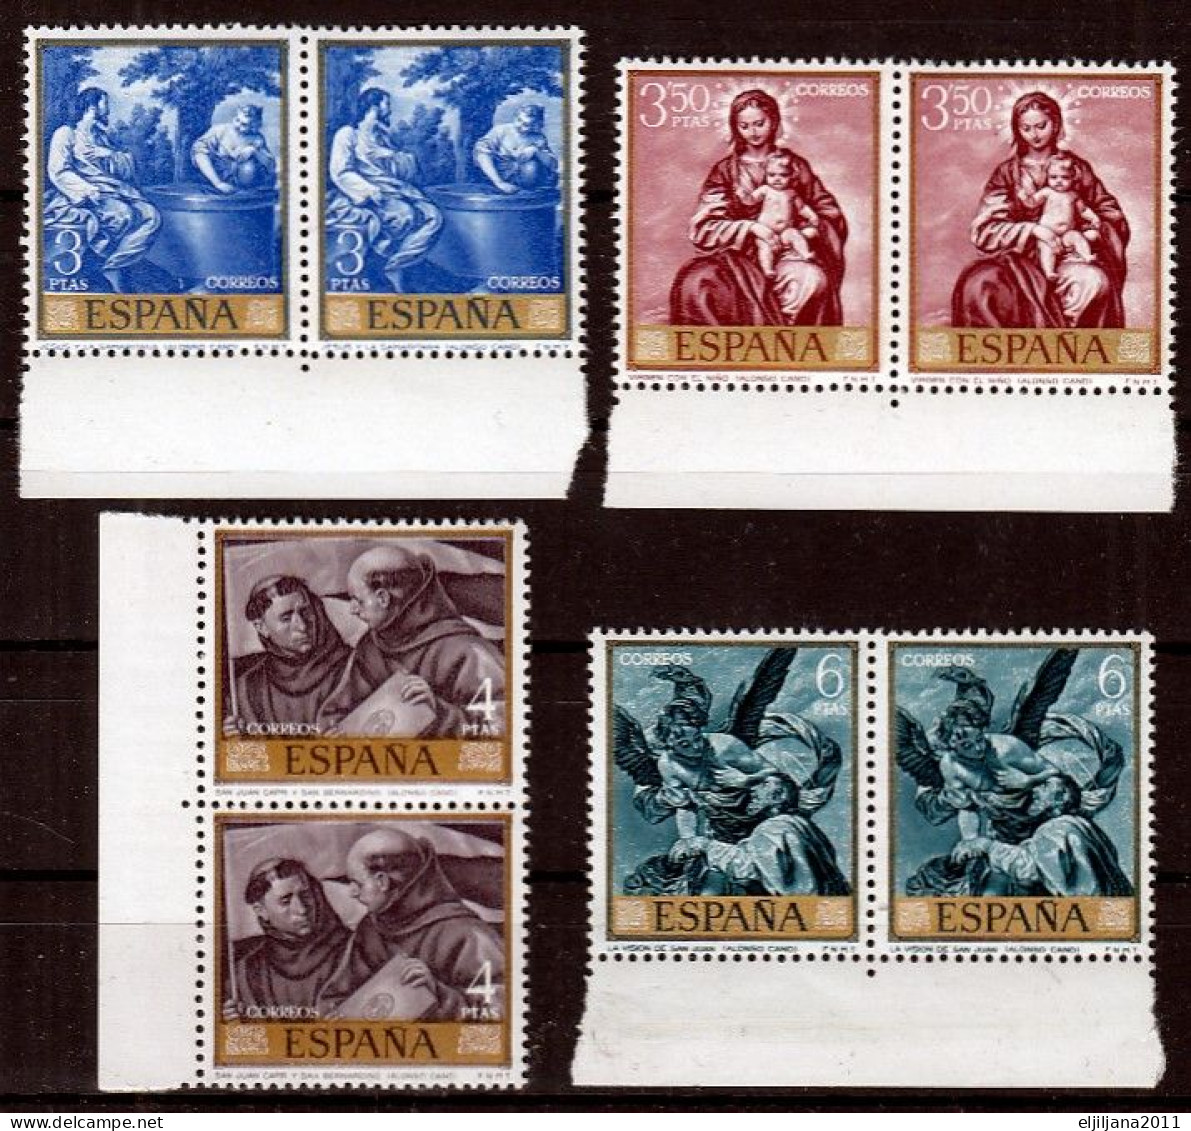 ⁕ SPAIN / ESPANA 1969 ⁕ Alonso Cano (stamp Day) Art Painting Gemalde Mi.1796-1805 X2 ⁕ MNH - Ungebraucht